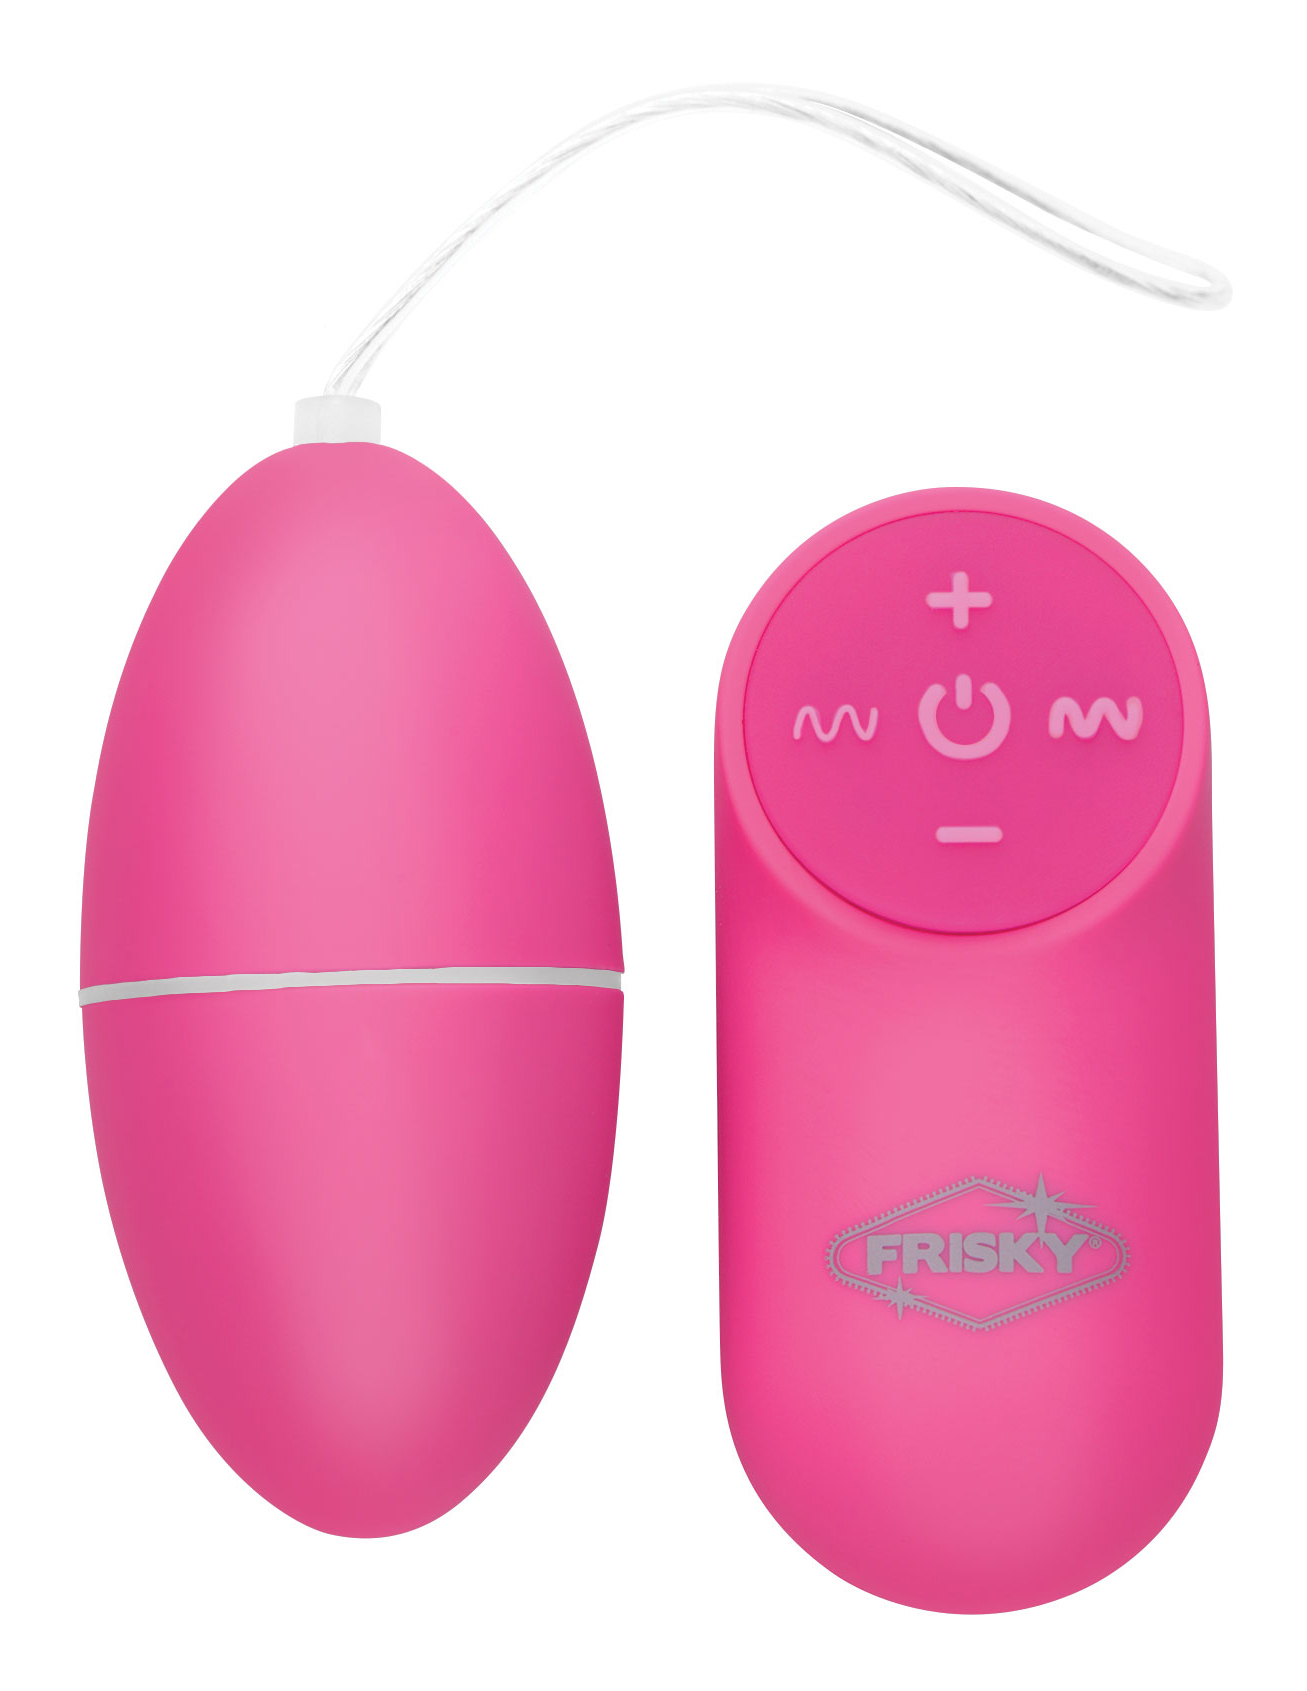 28X Scrambler Vibrating Egg with Remote Control – Pink